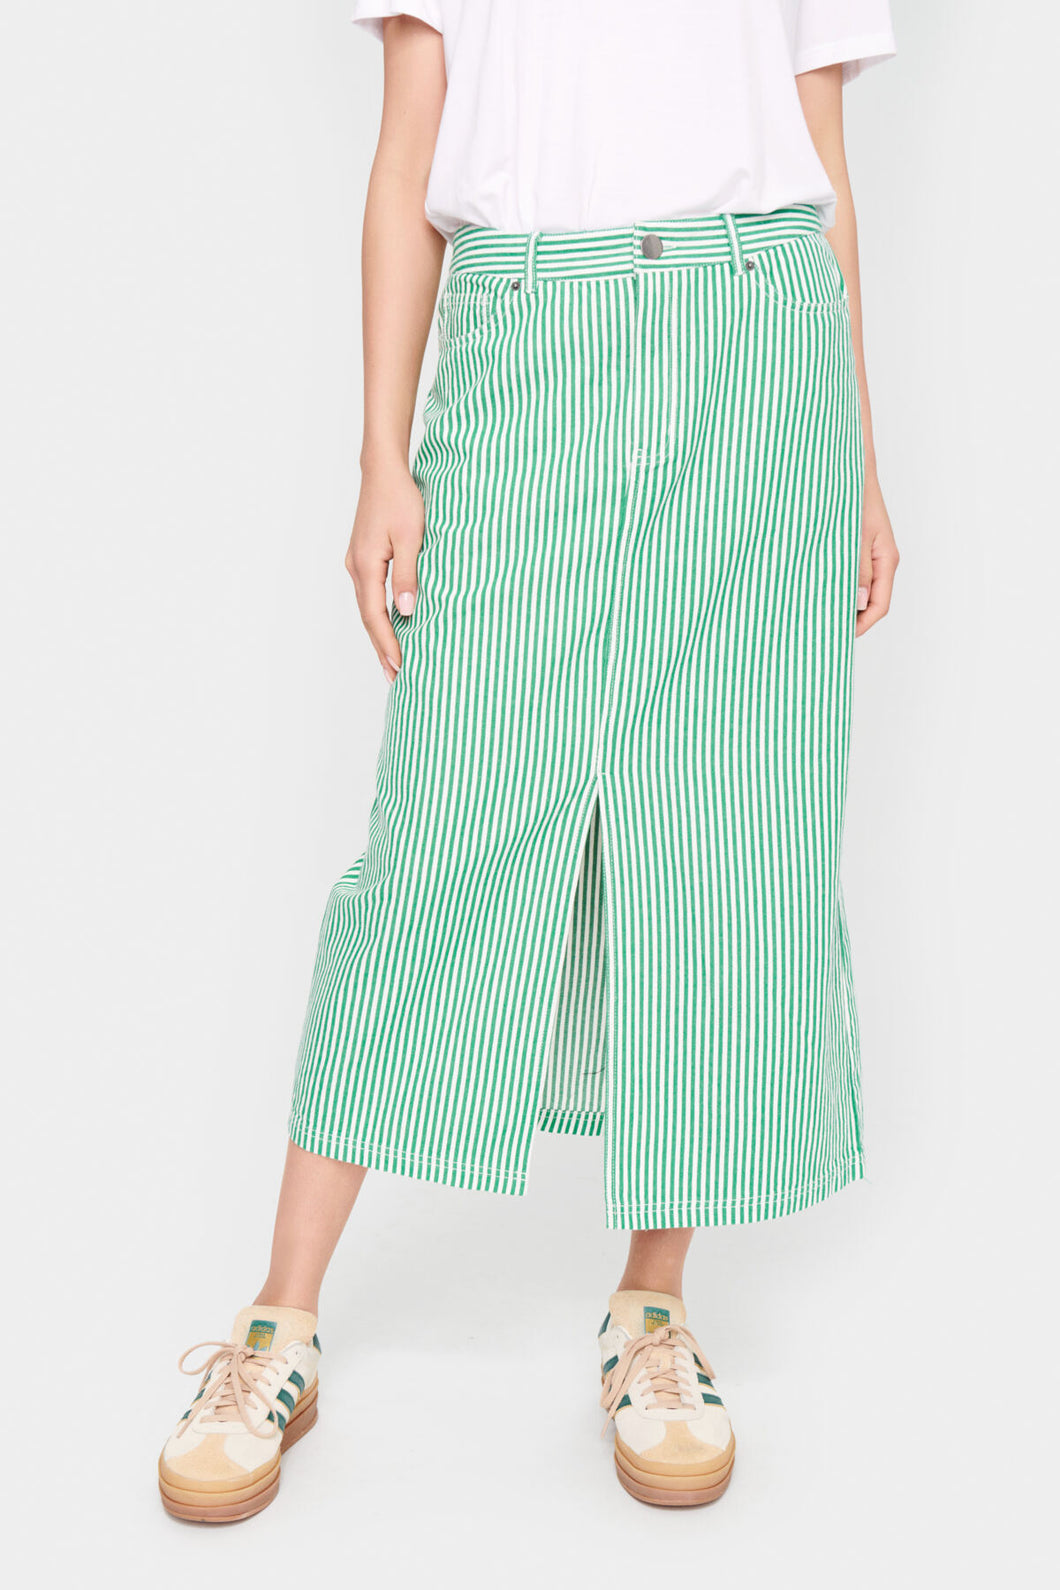 Saint Tropez - Green Stripe Skirt - Ditten